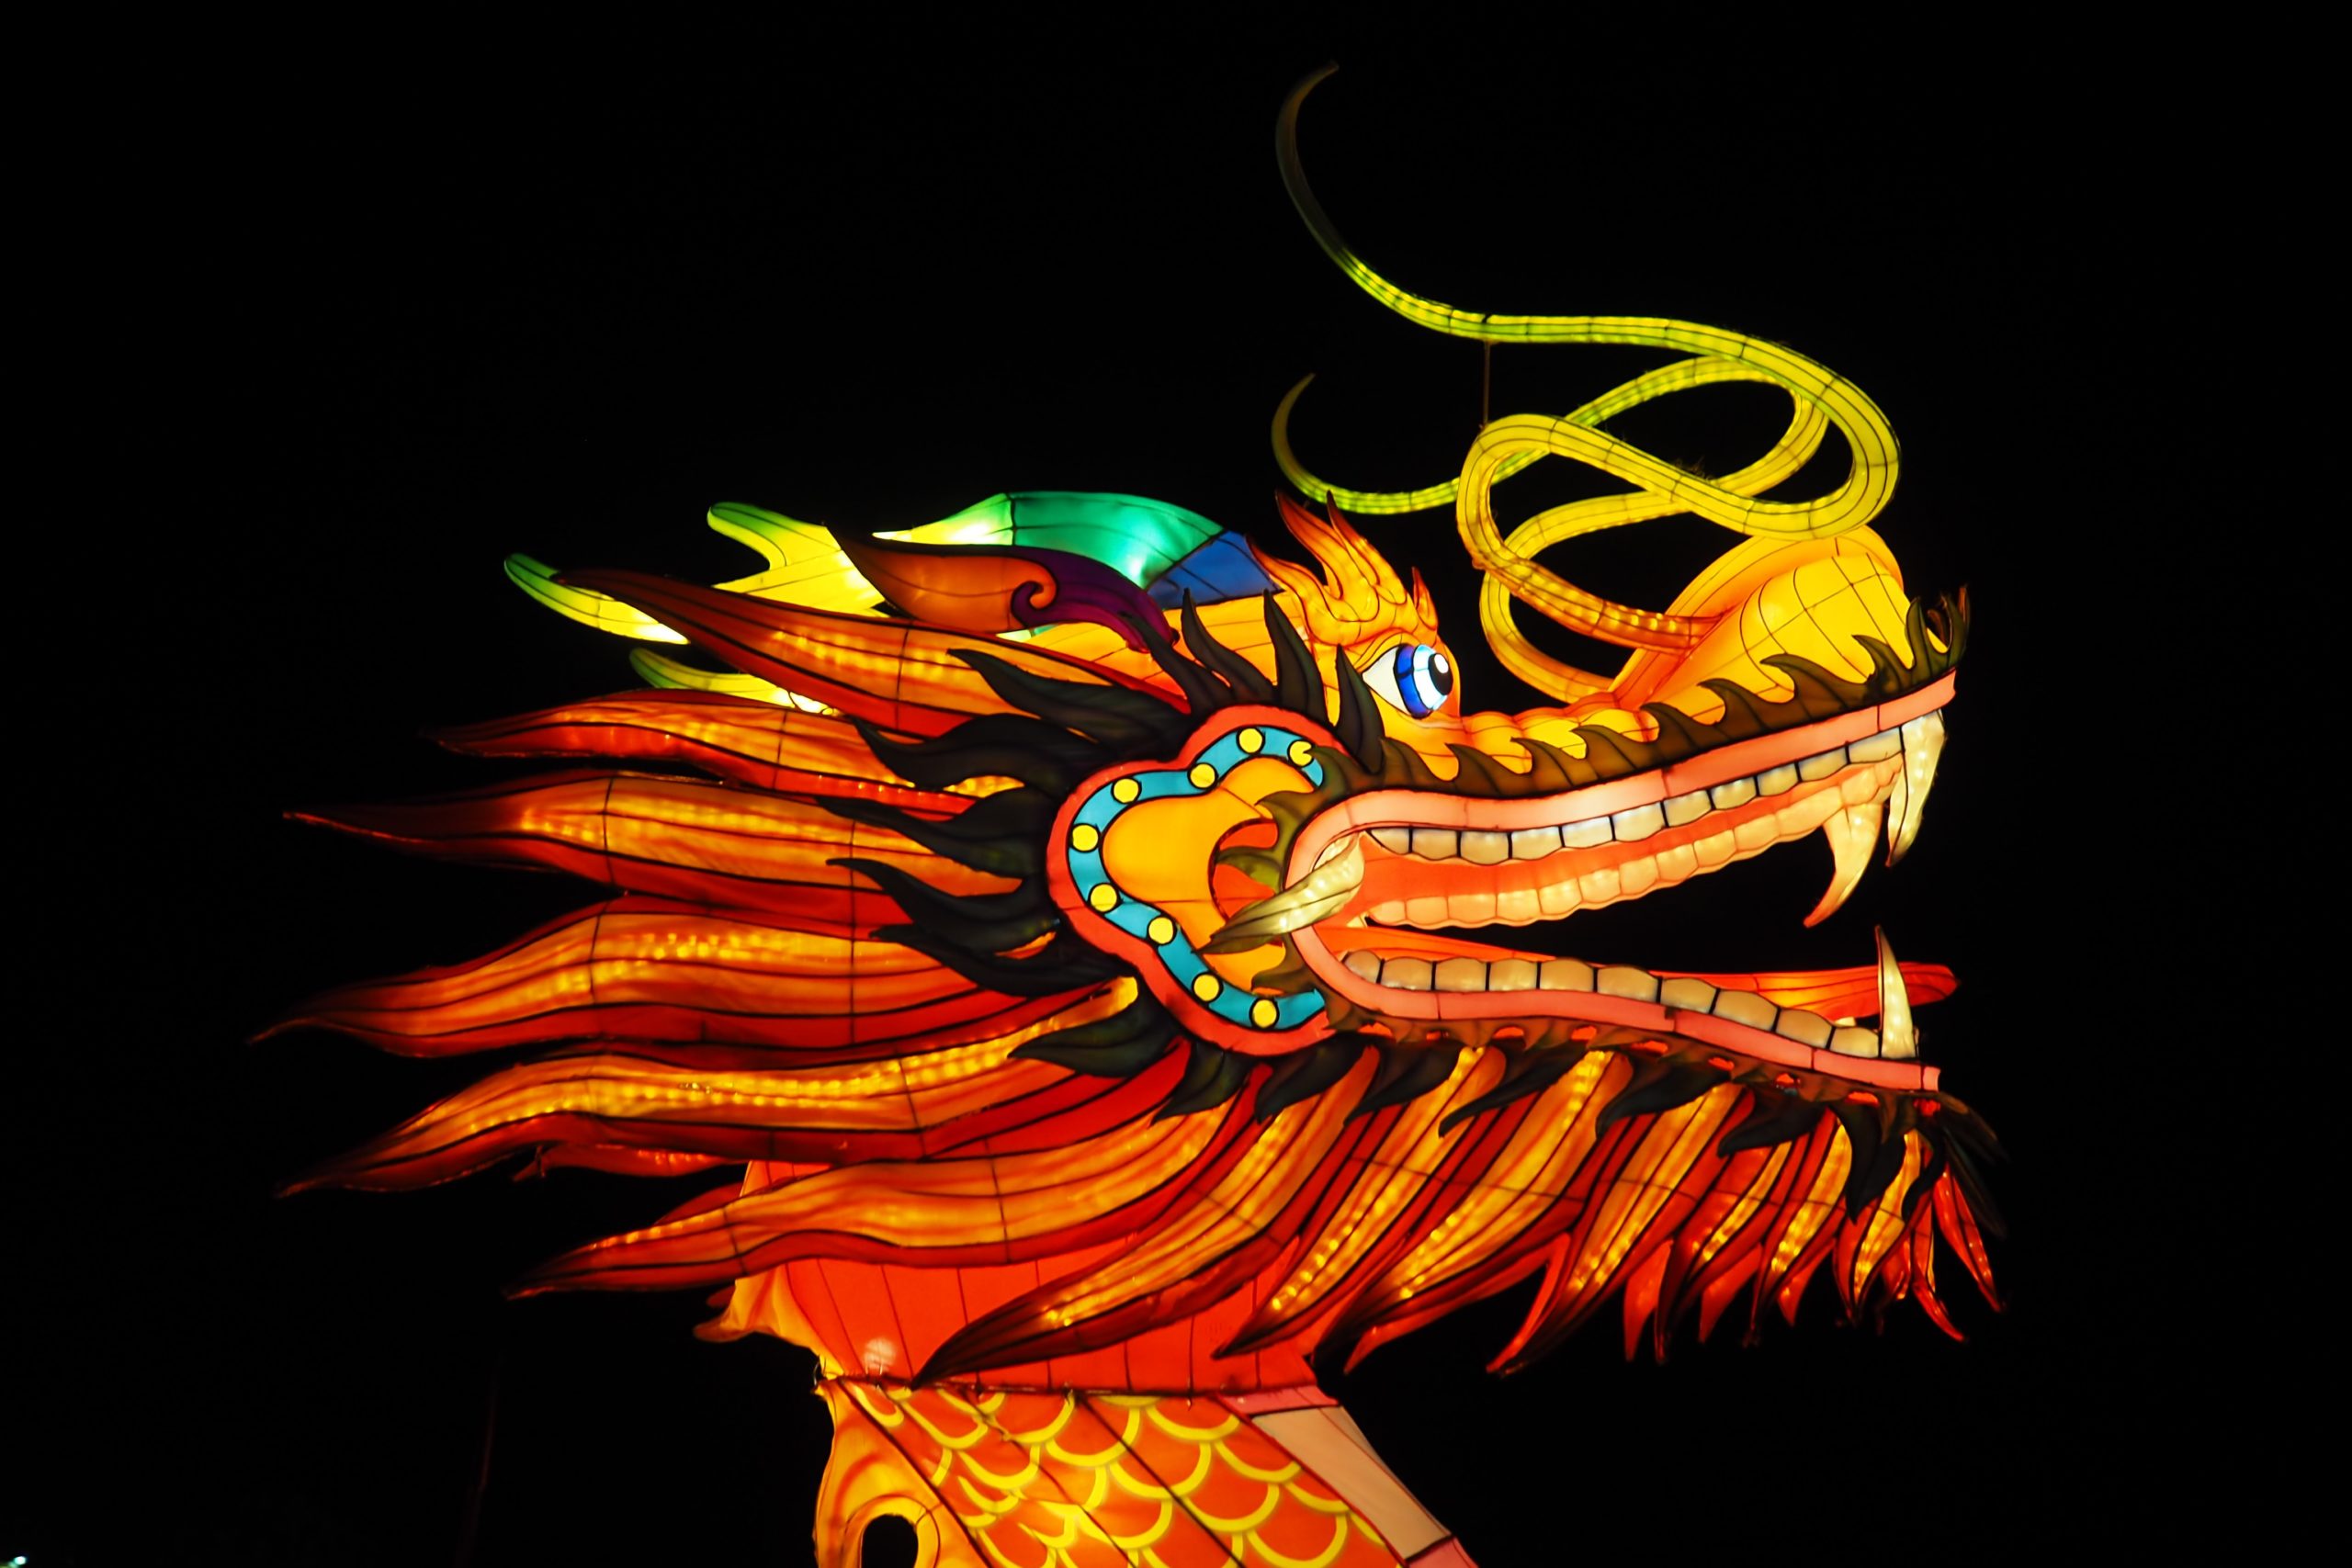 Richard Chan Orthodontics is Celebrating Chinese New Year!